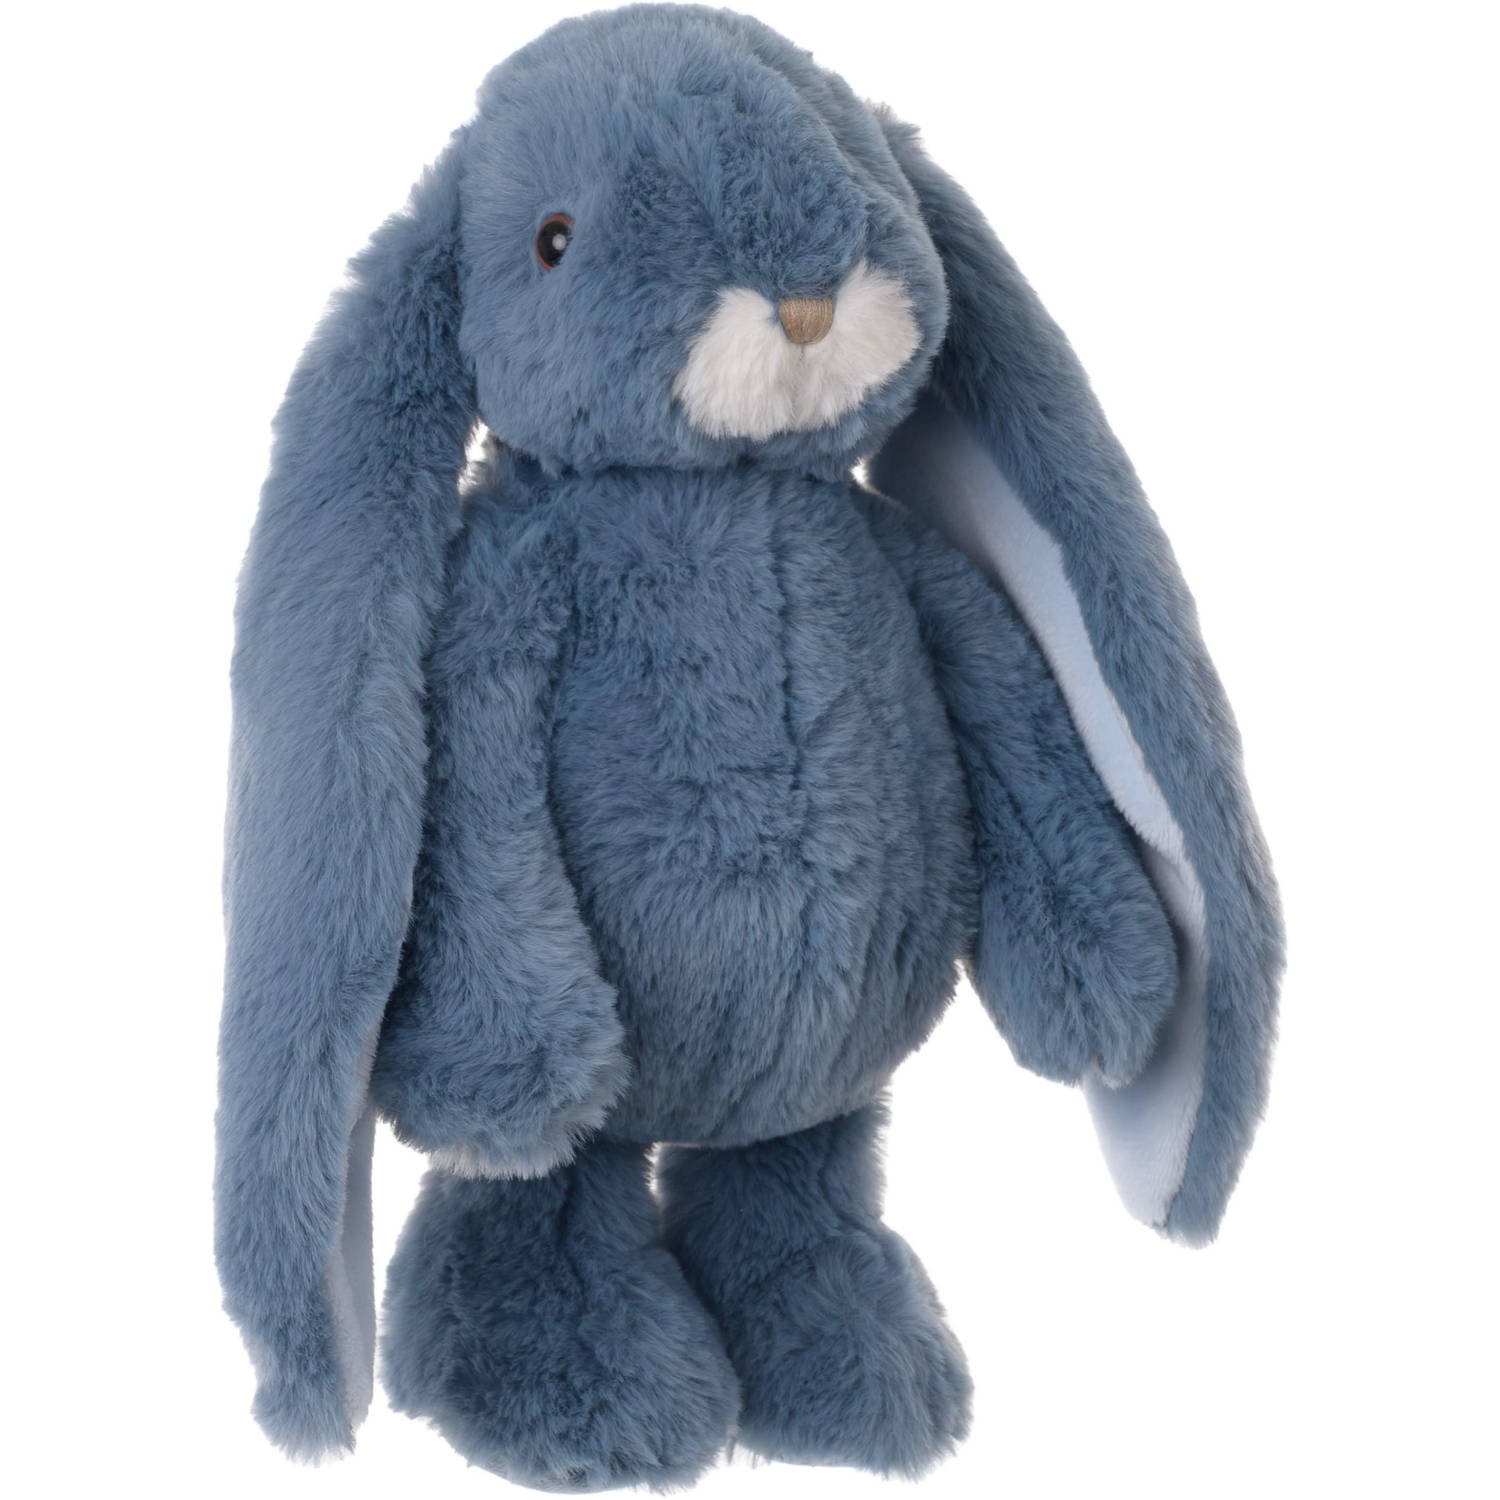 Bukowski pluche konijn knuffeldier - blauw - staand - 30 cm - Luxe kwaliteit knuffels